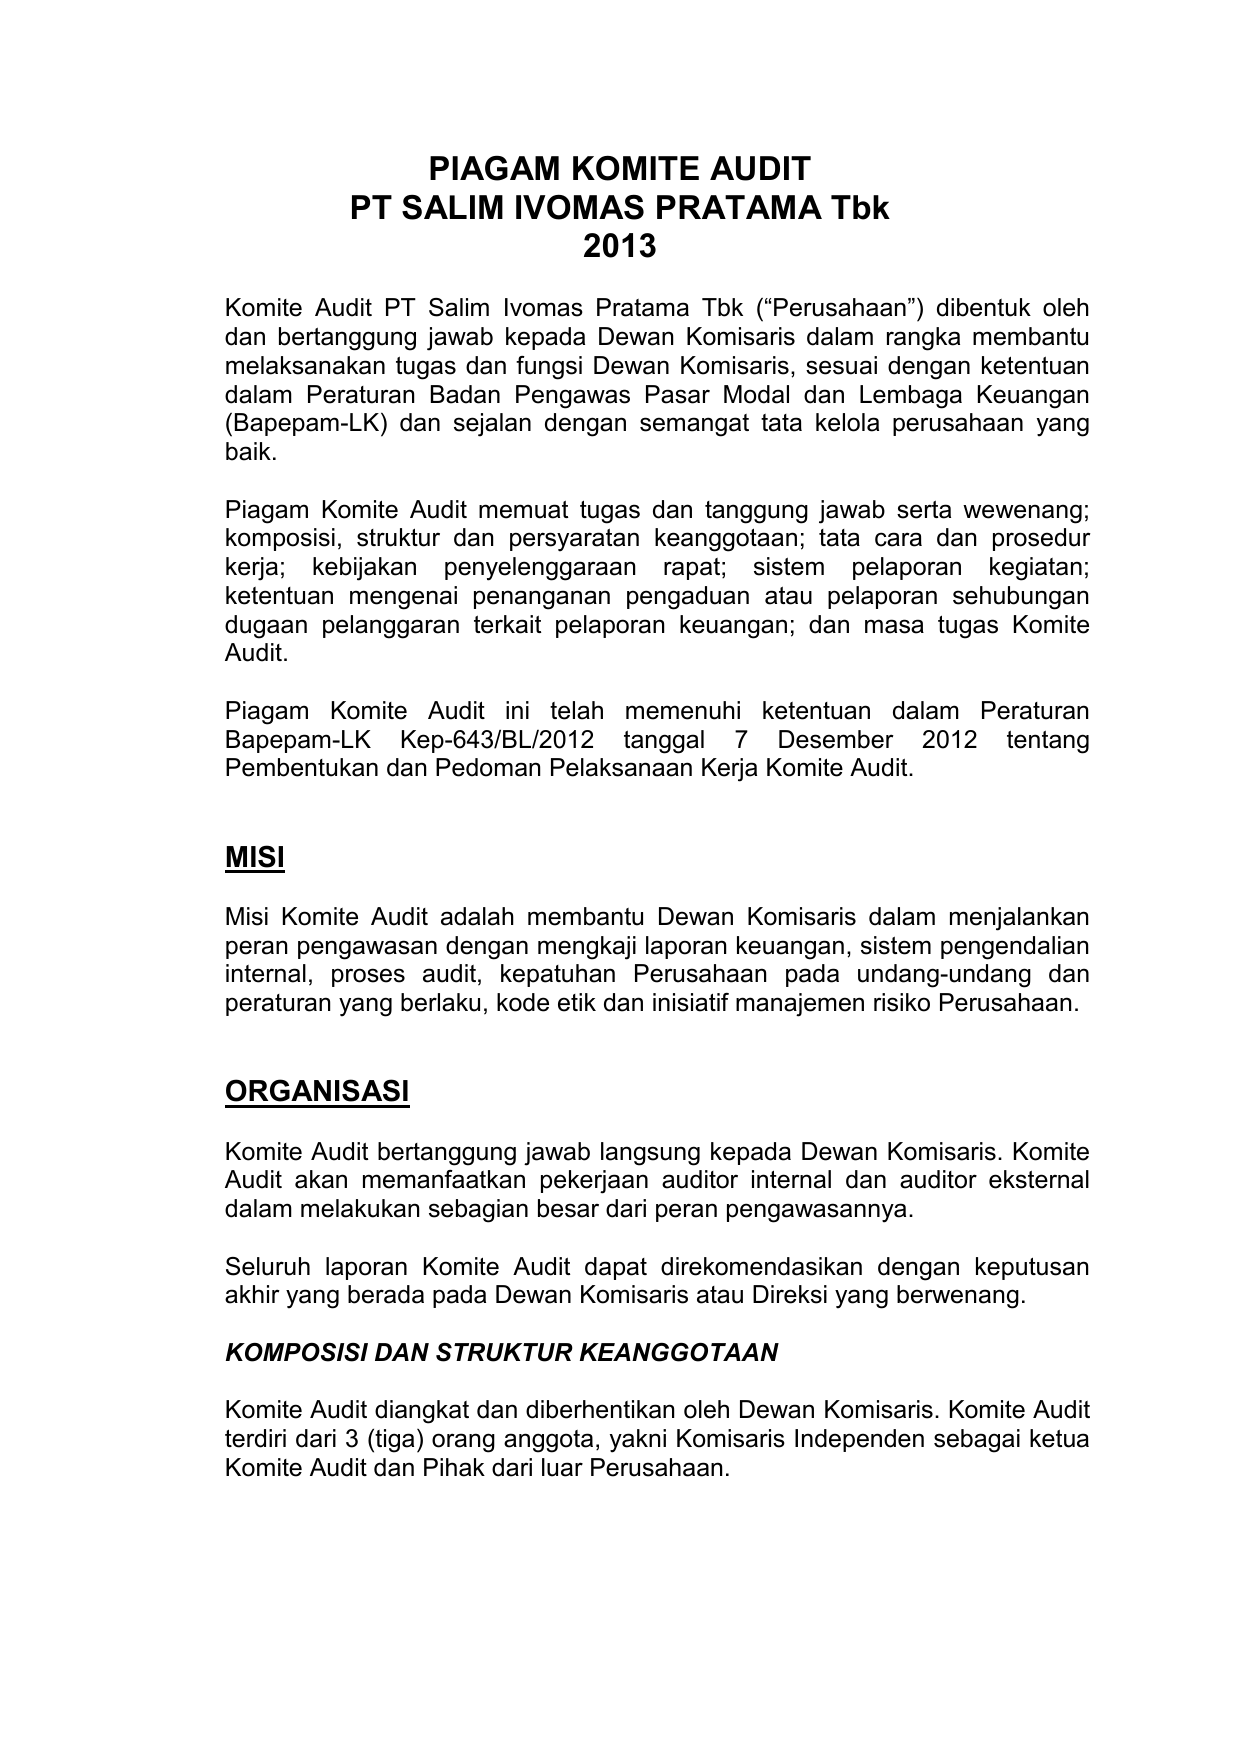 Ac Charter Simp 2013 Bahasa Indonesia